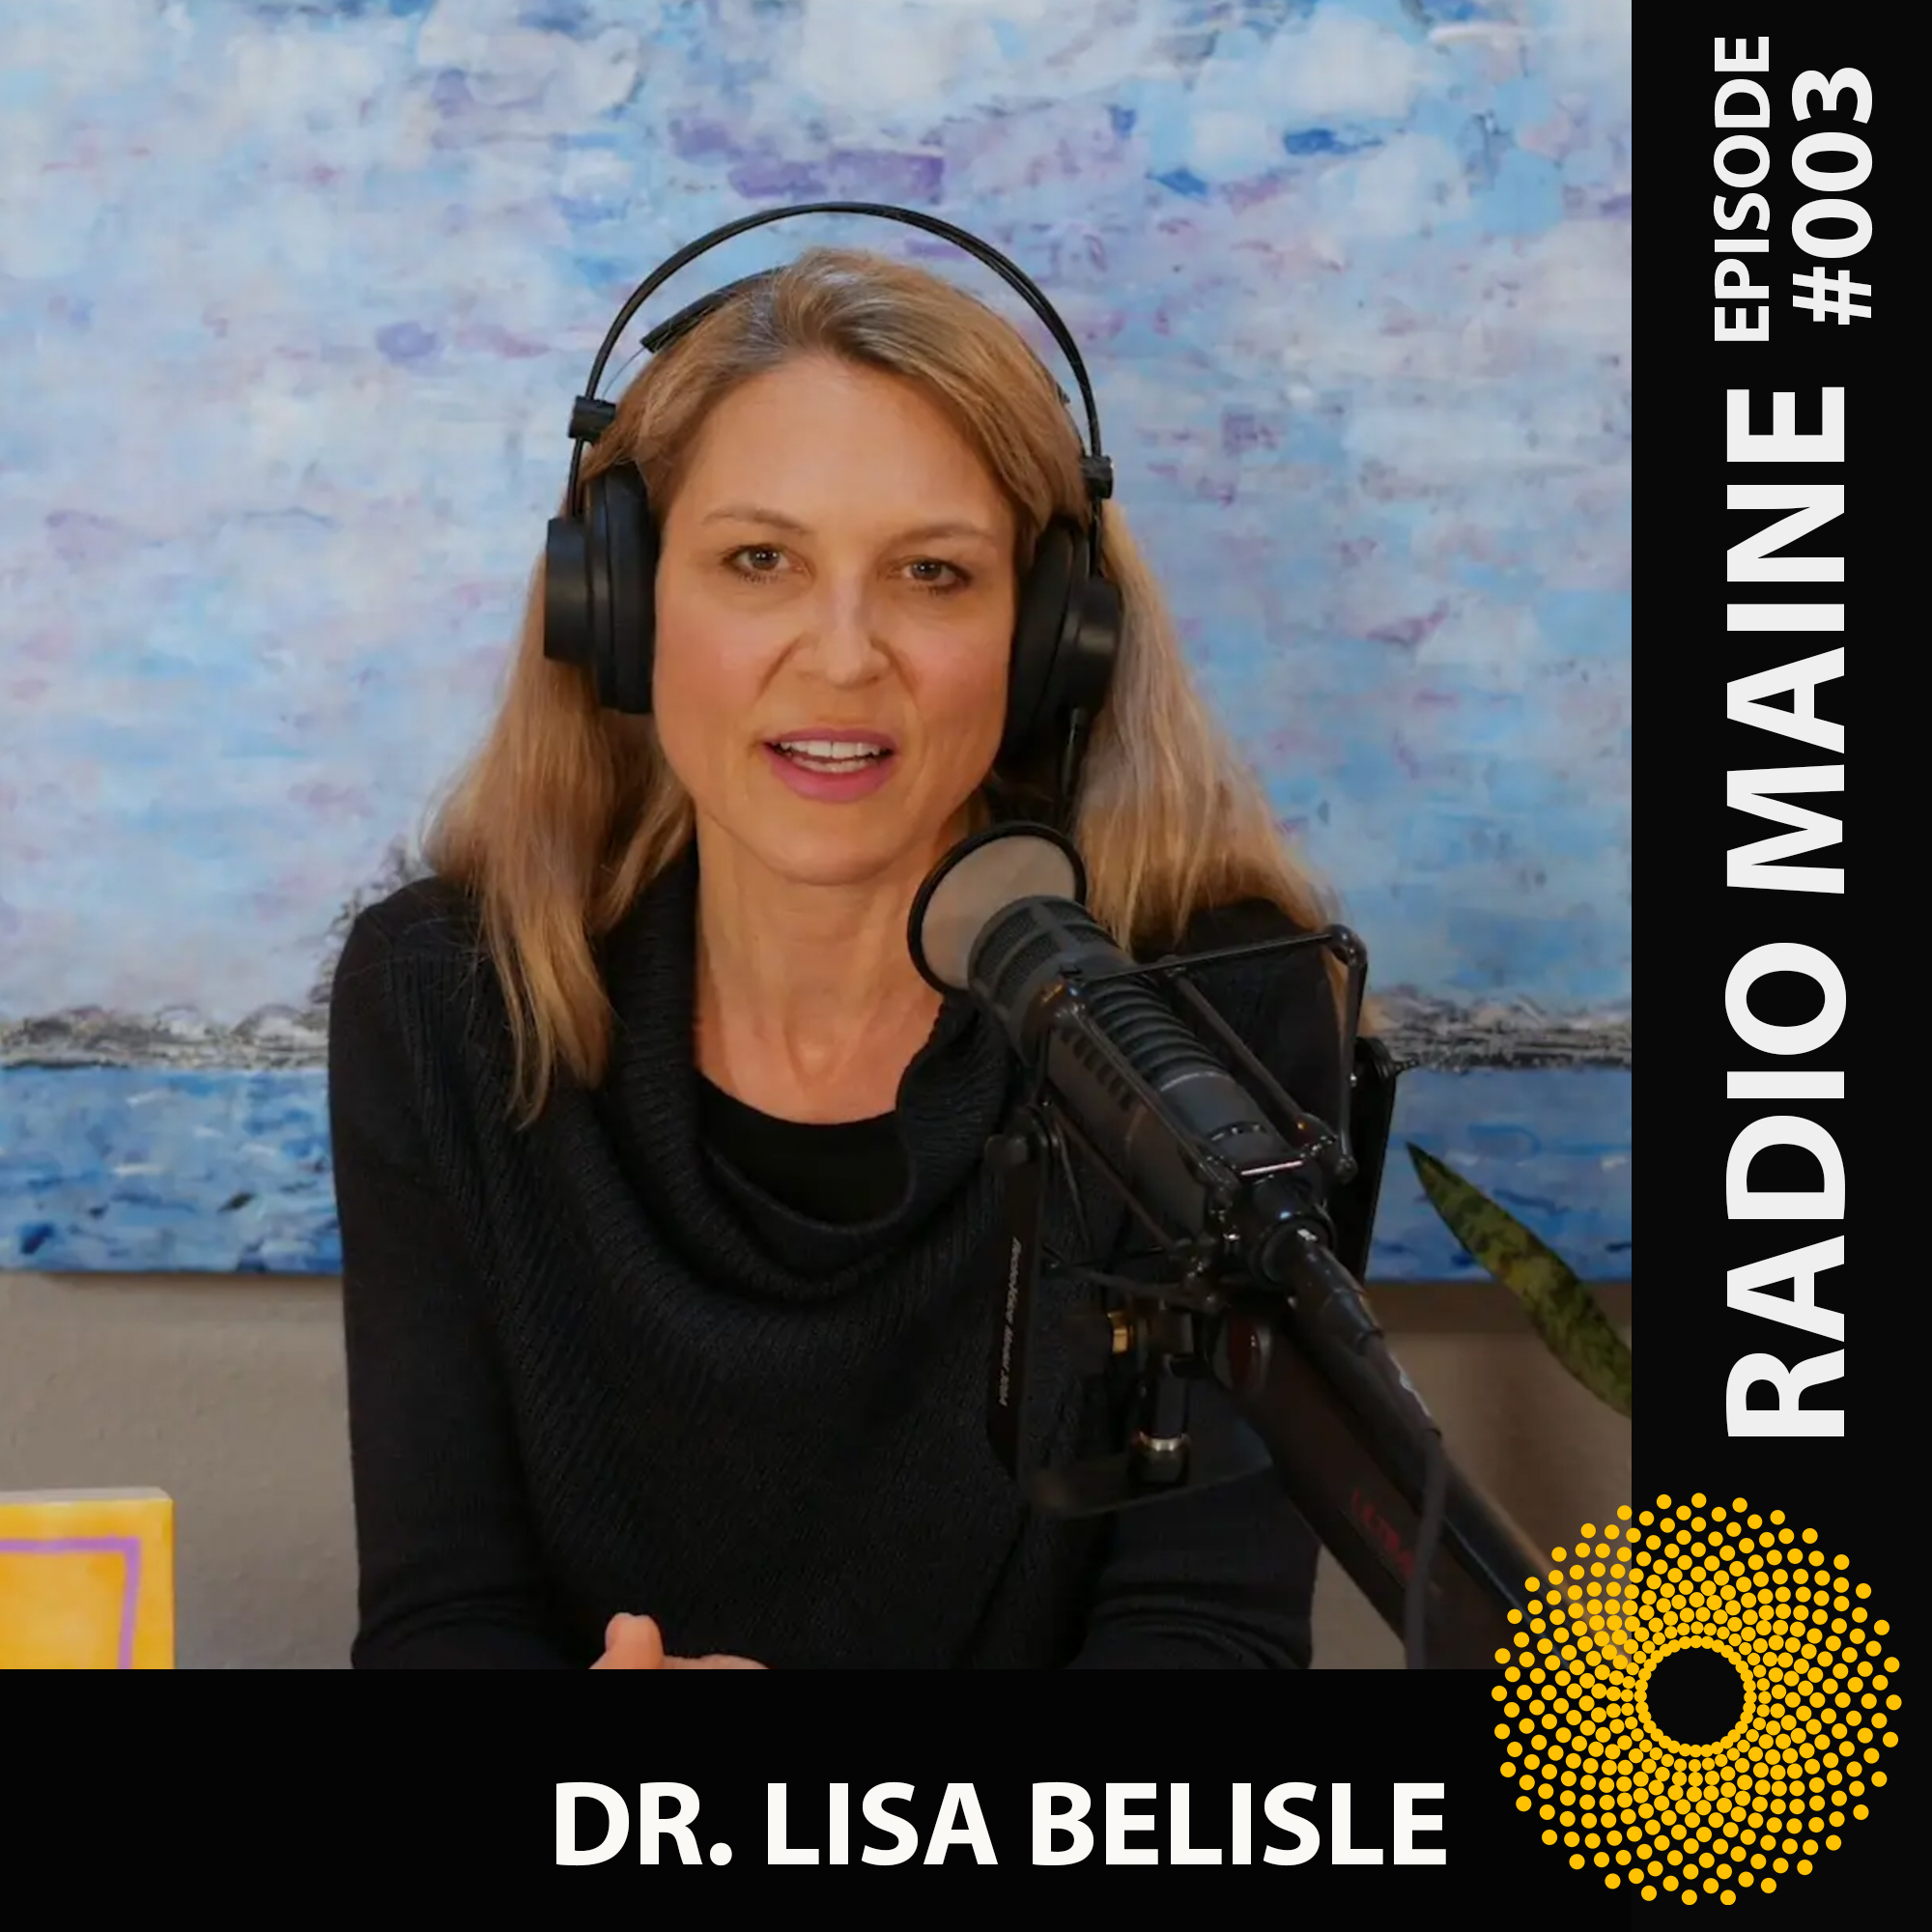 Meet the host of Maine artist William "Bill" Crosby being interviewed on Radio Maine with Dr. Lisa Belisle